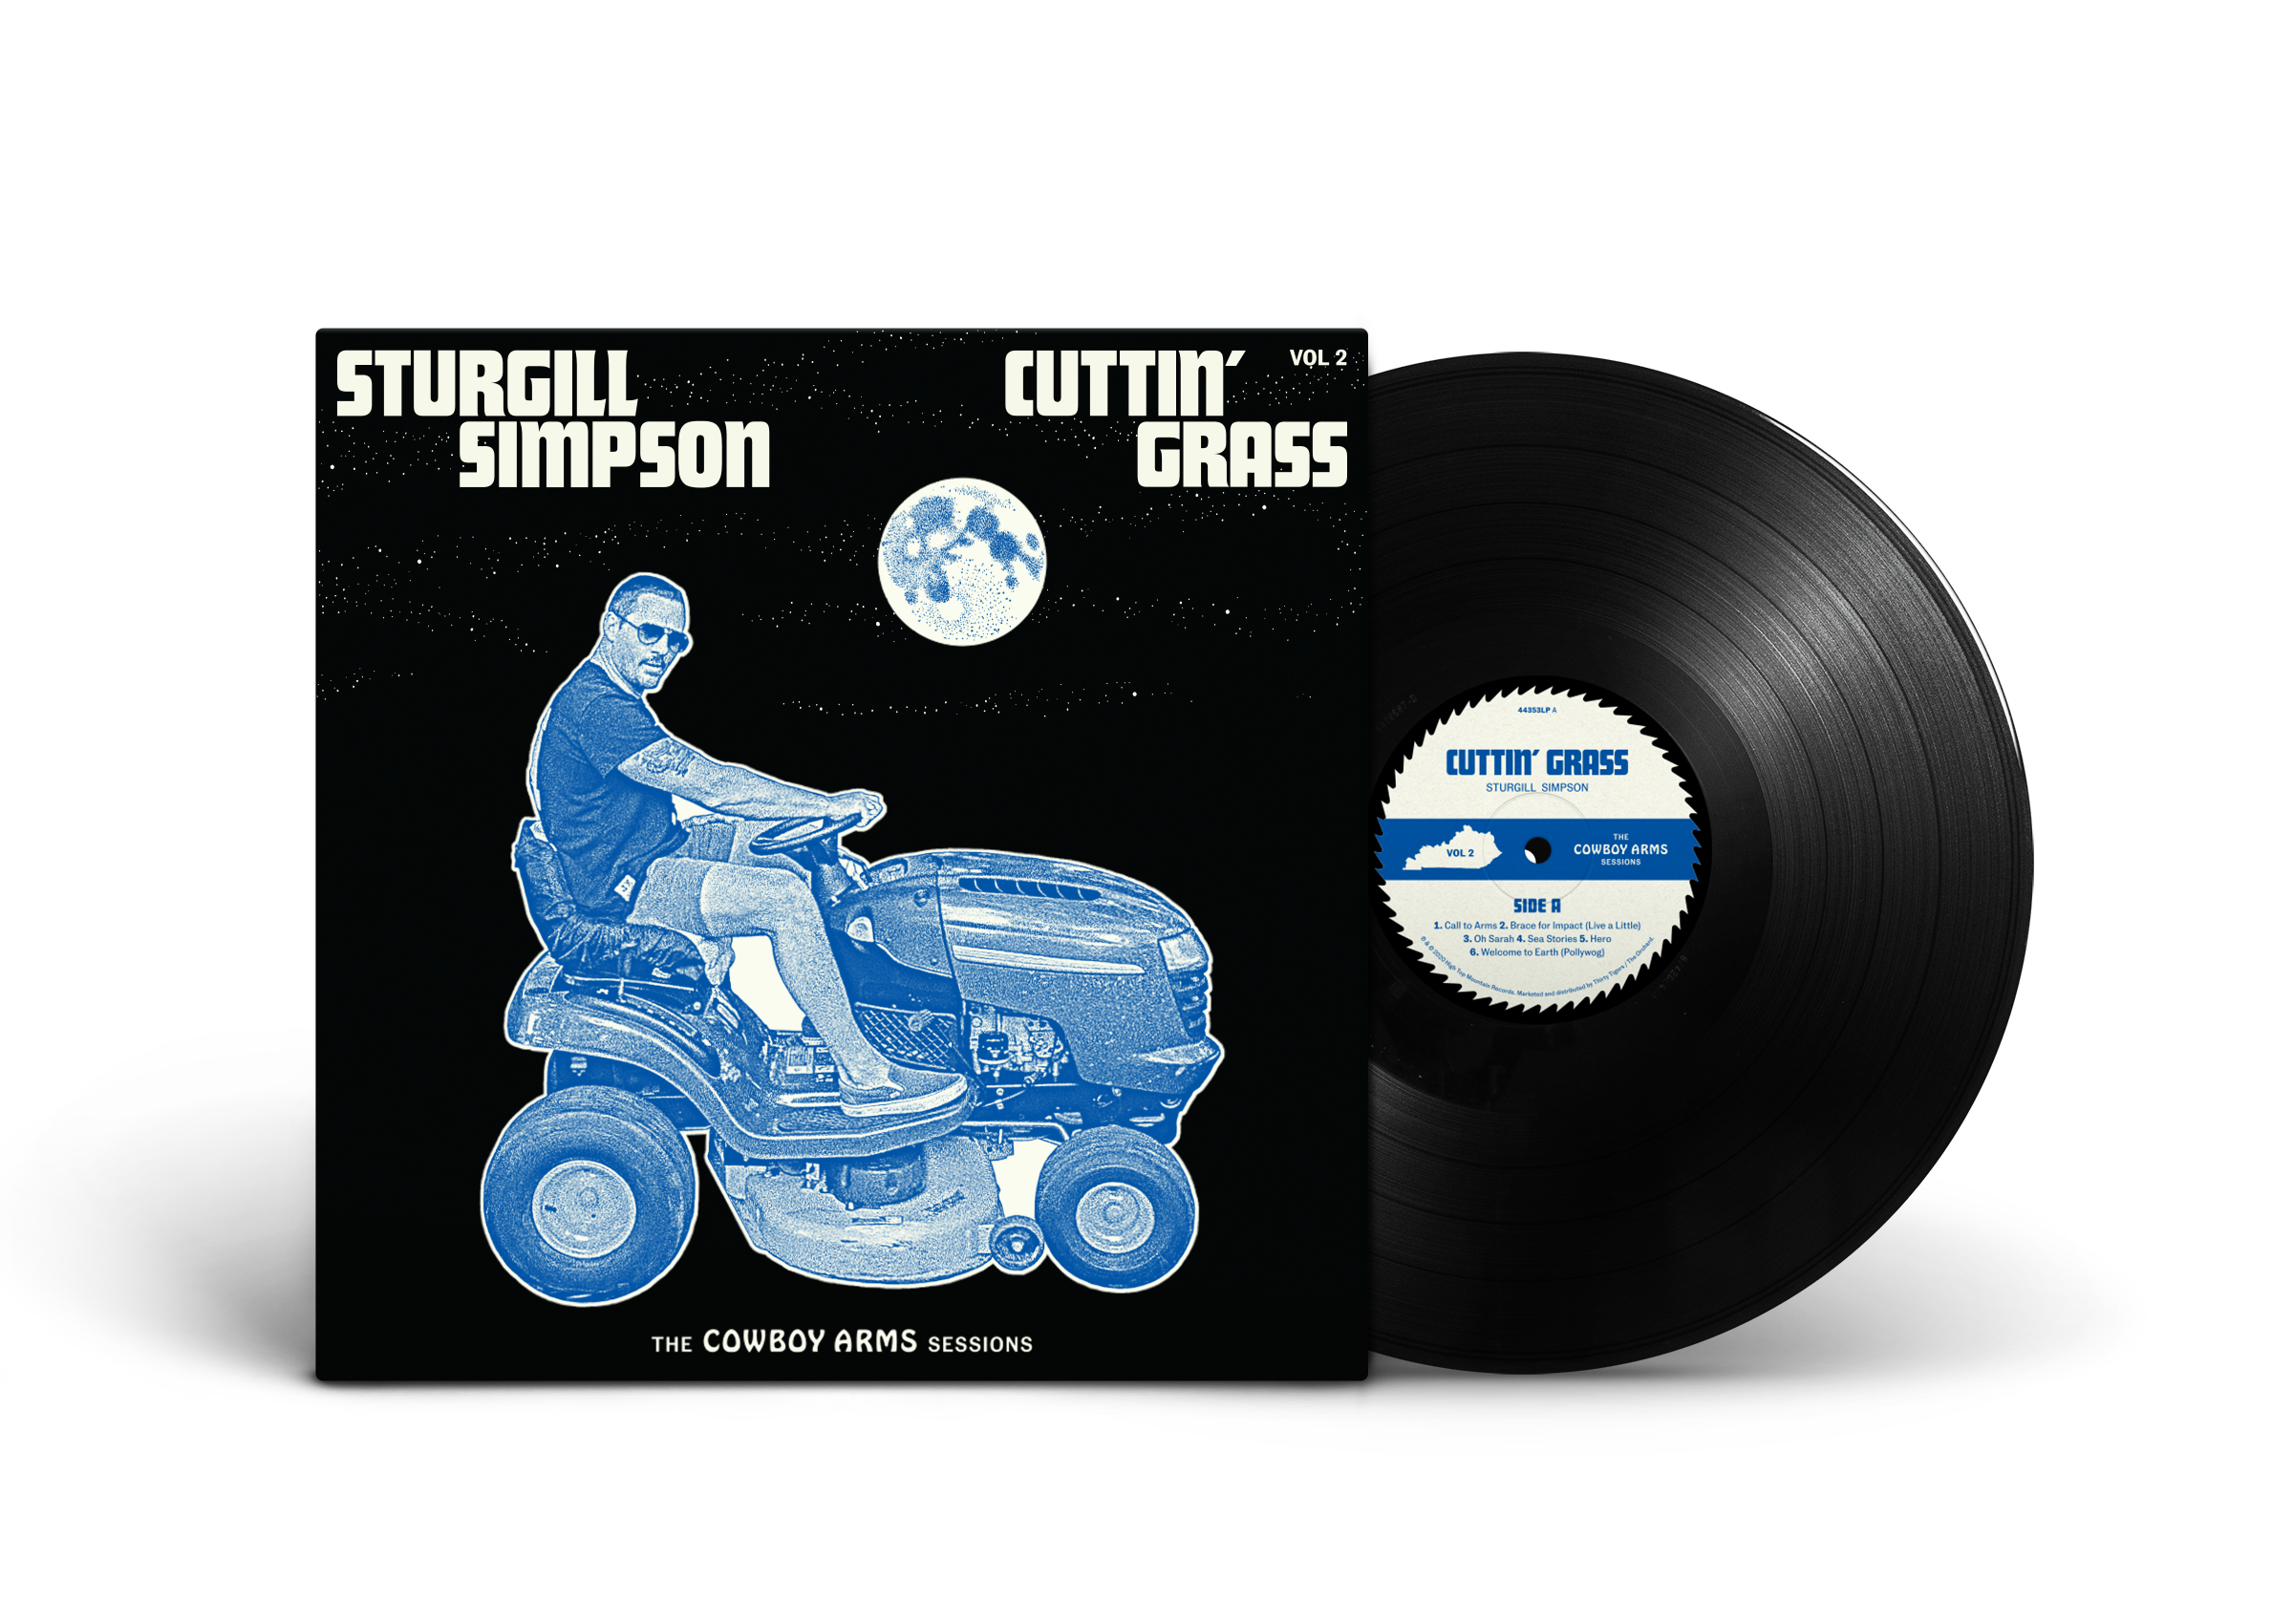 Sturgill Simpson | Cuttin' Grass Vol. 2 (Cowboy Arms Sessions) | Vinyl